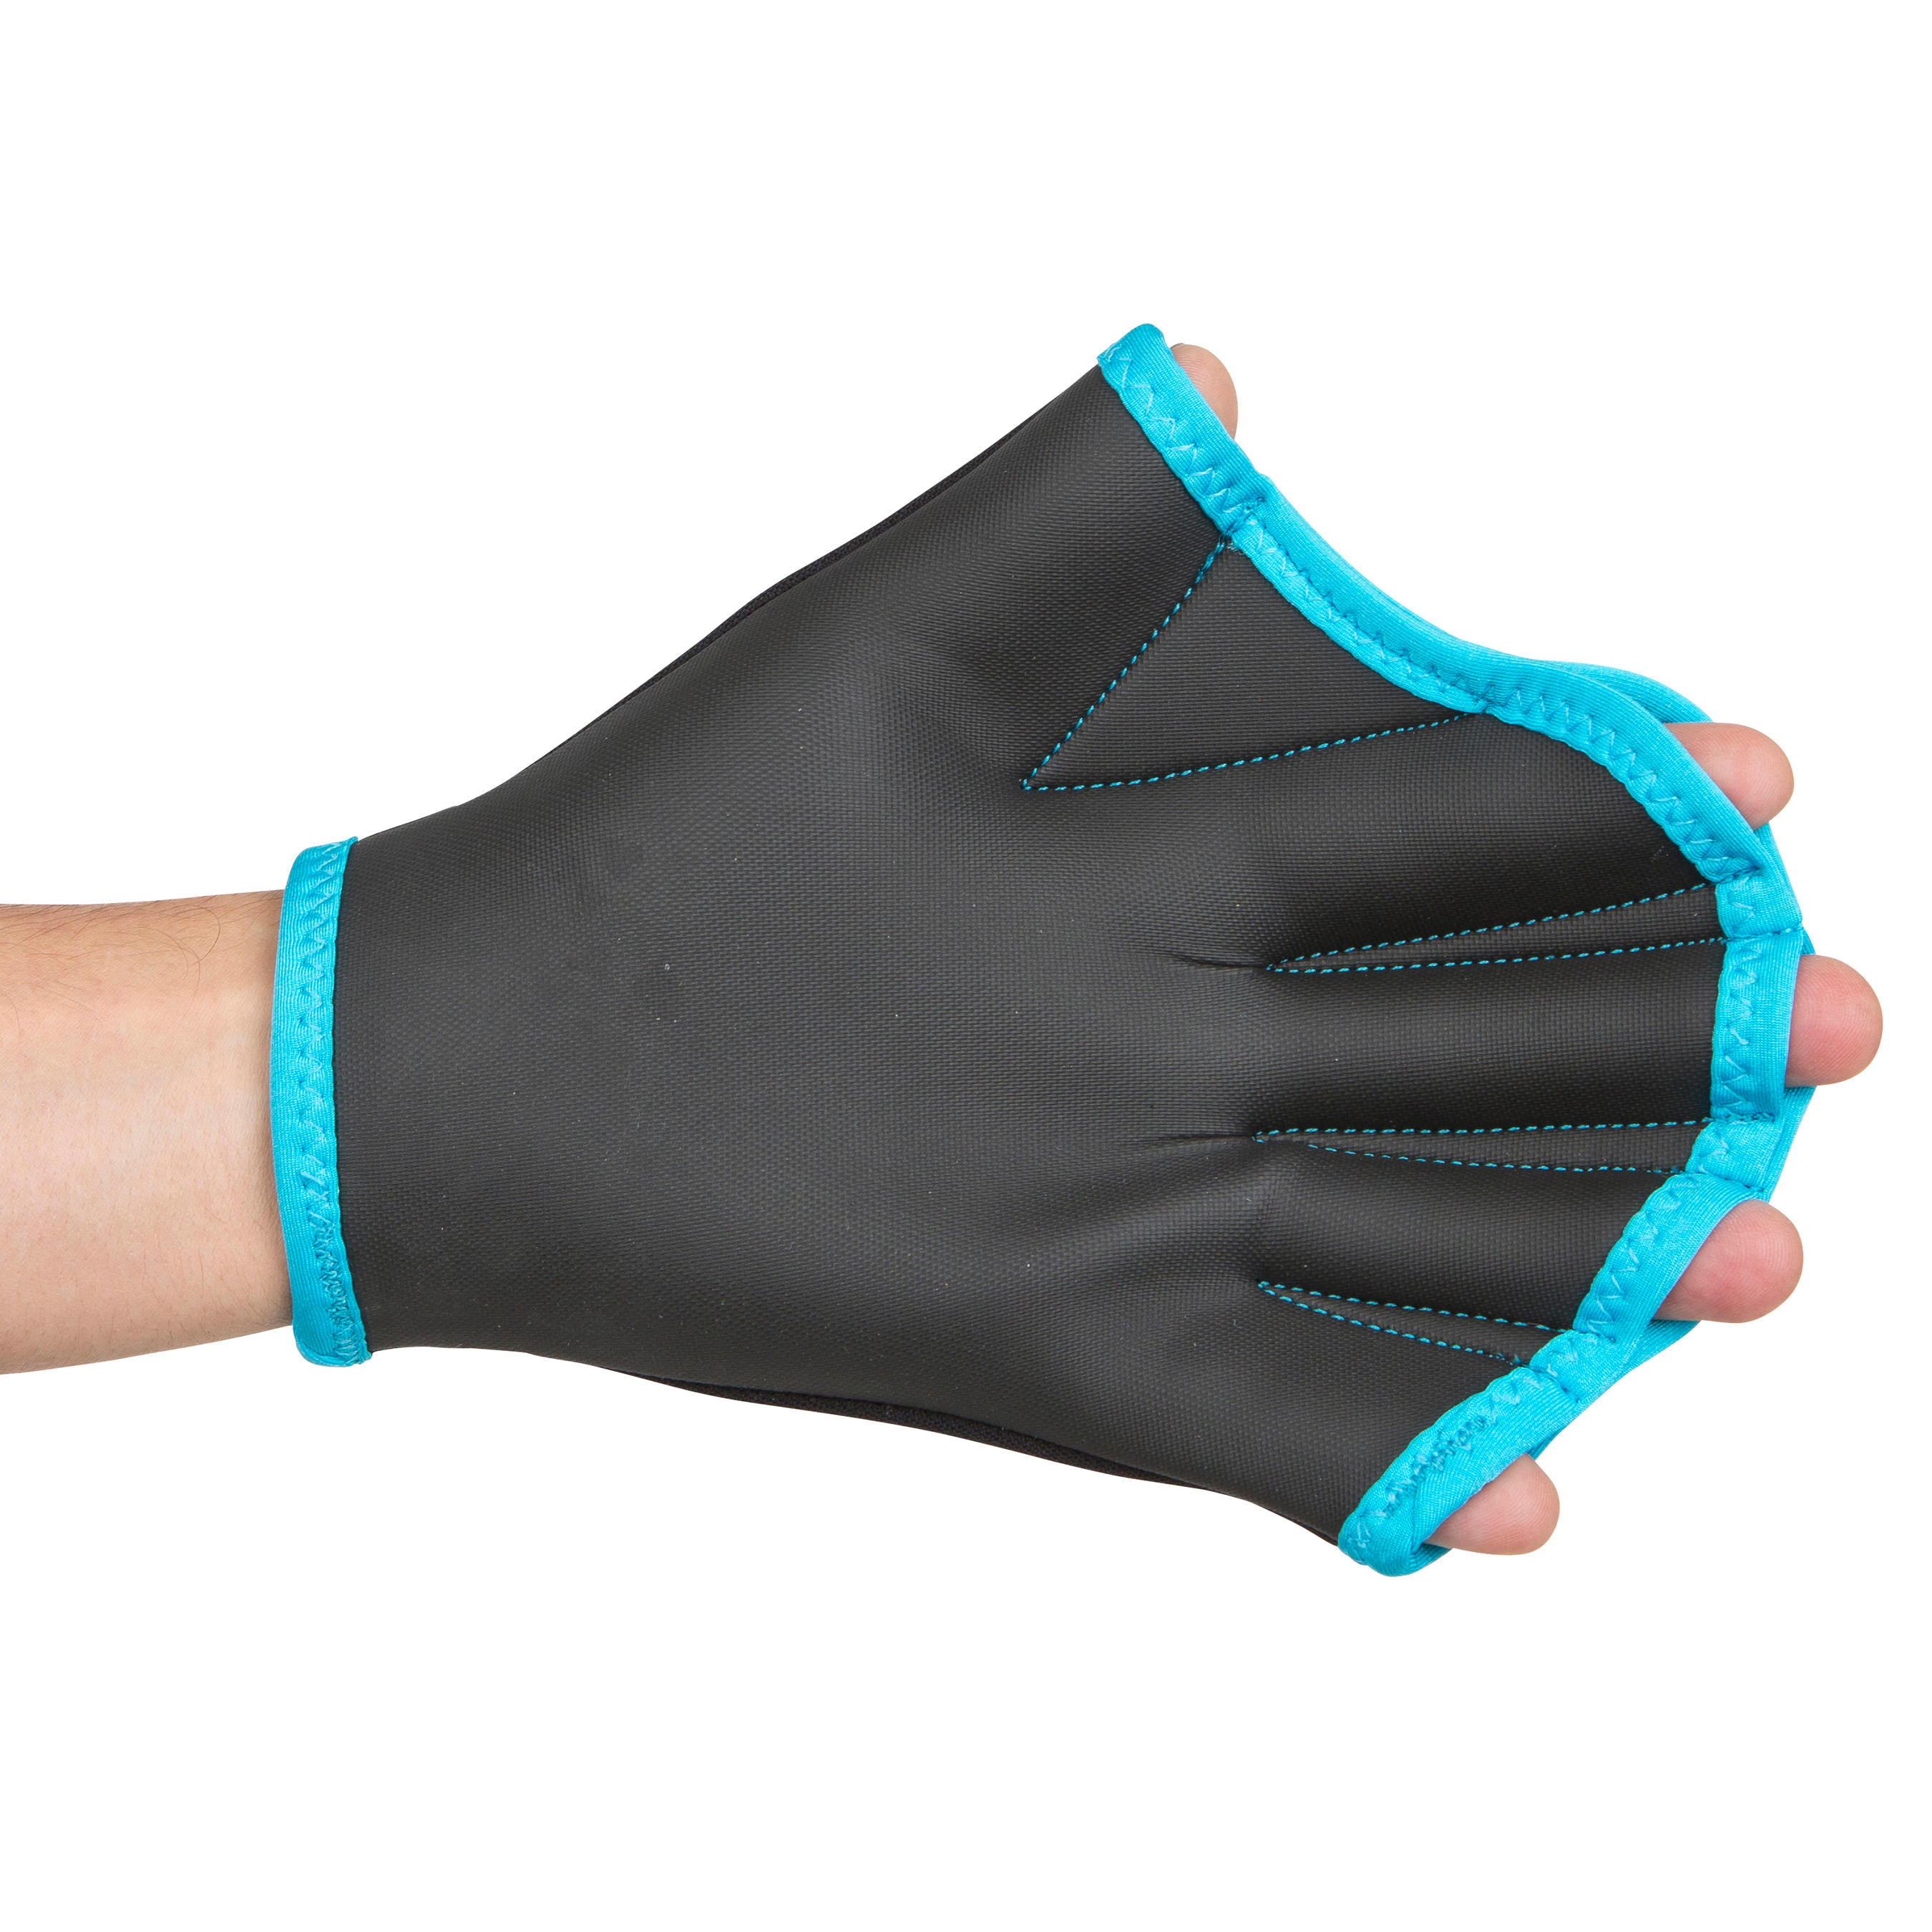 Webbed Aquafitness Gloves Blue 9/10